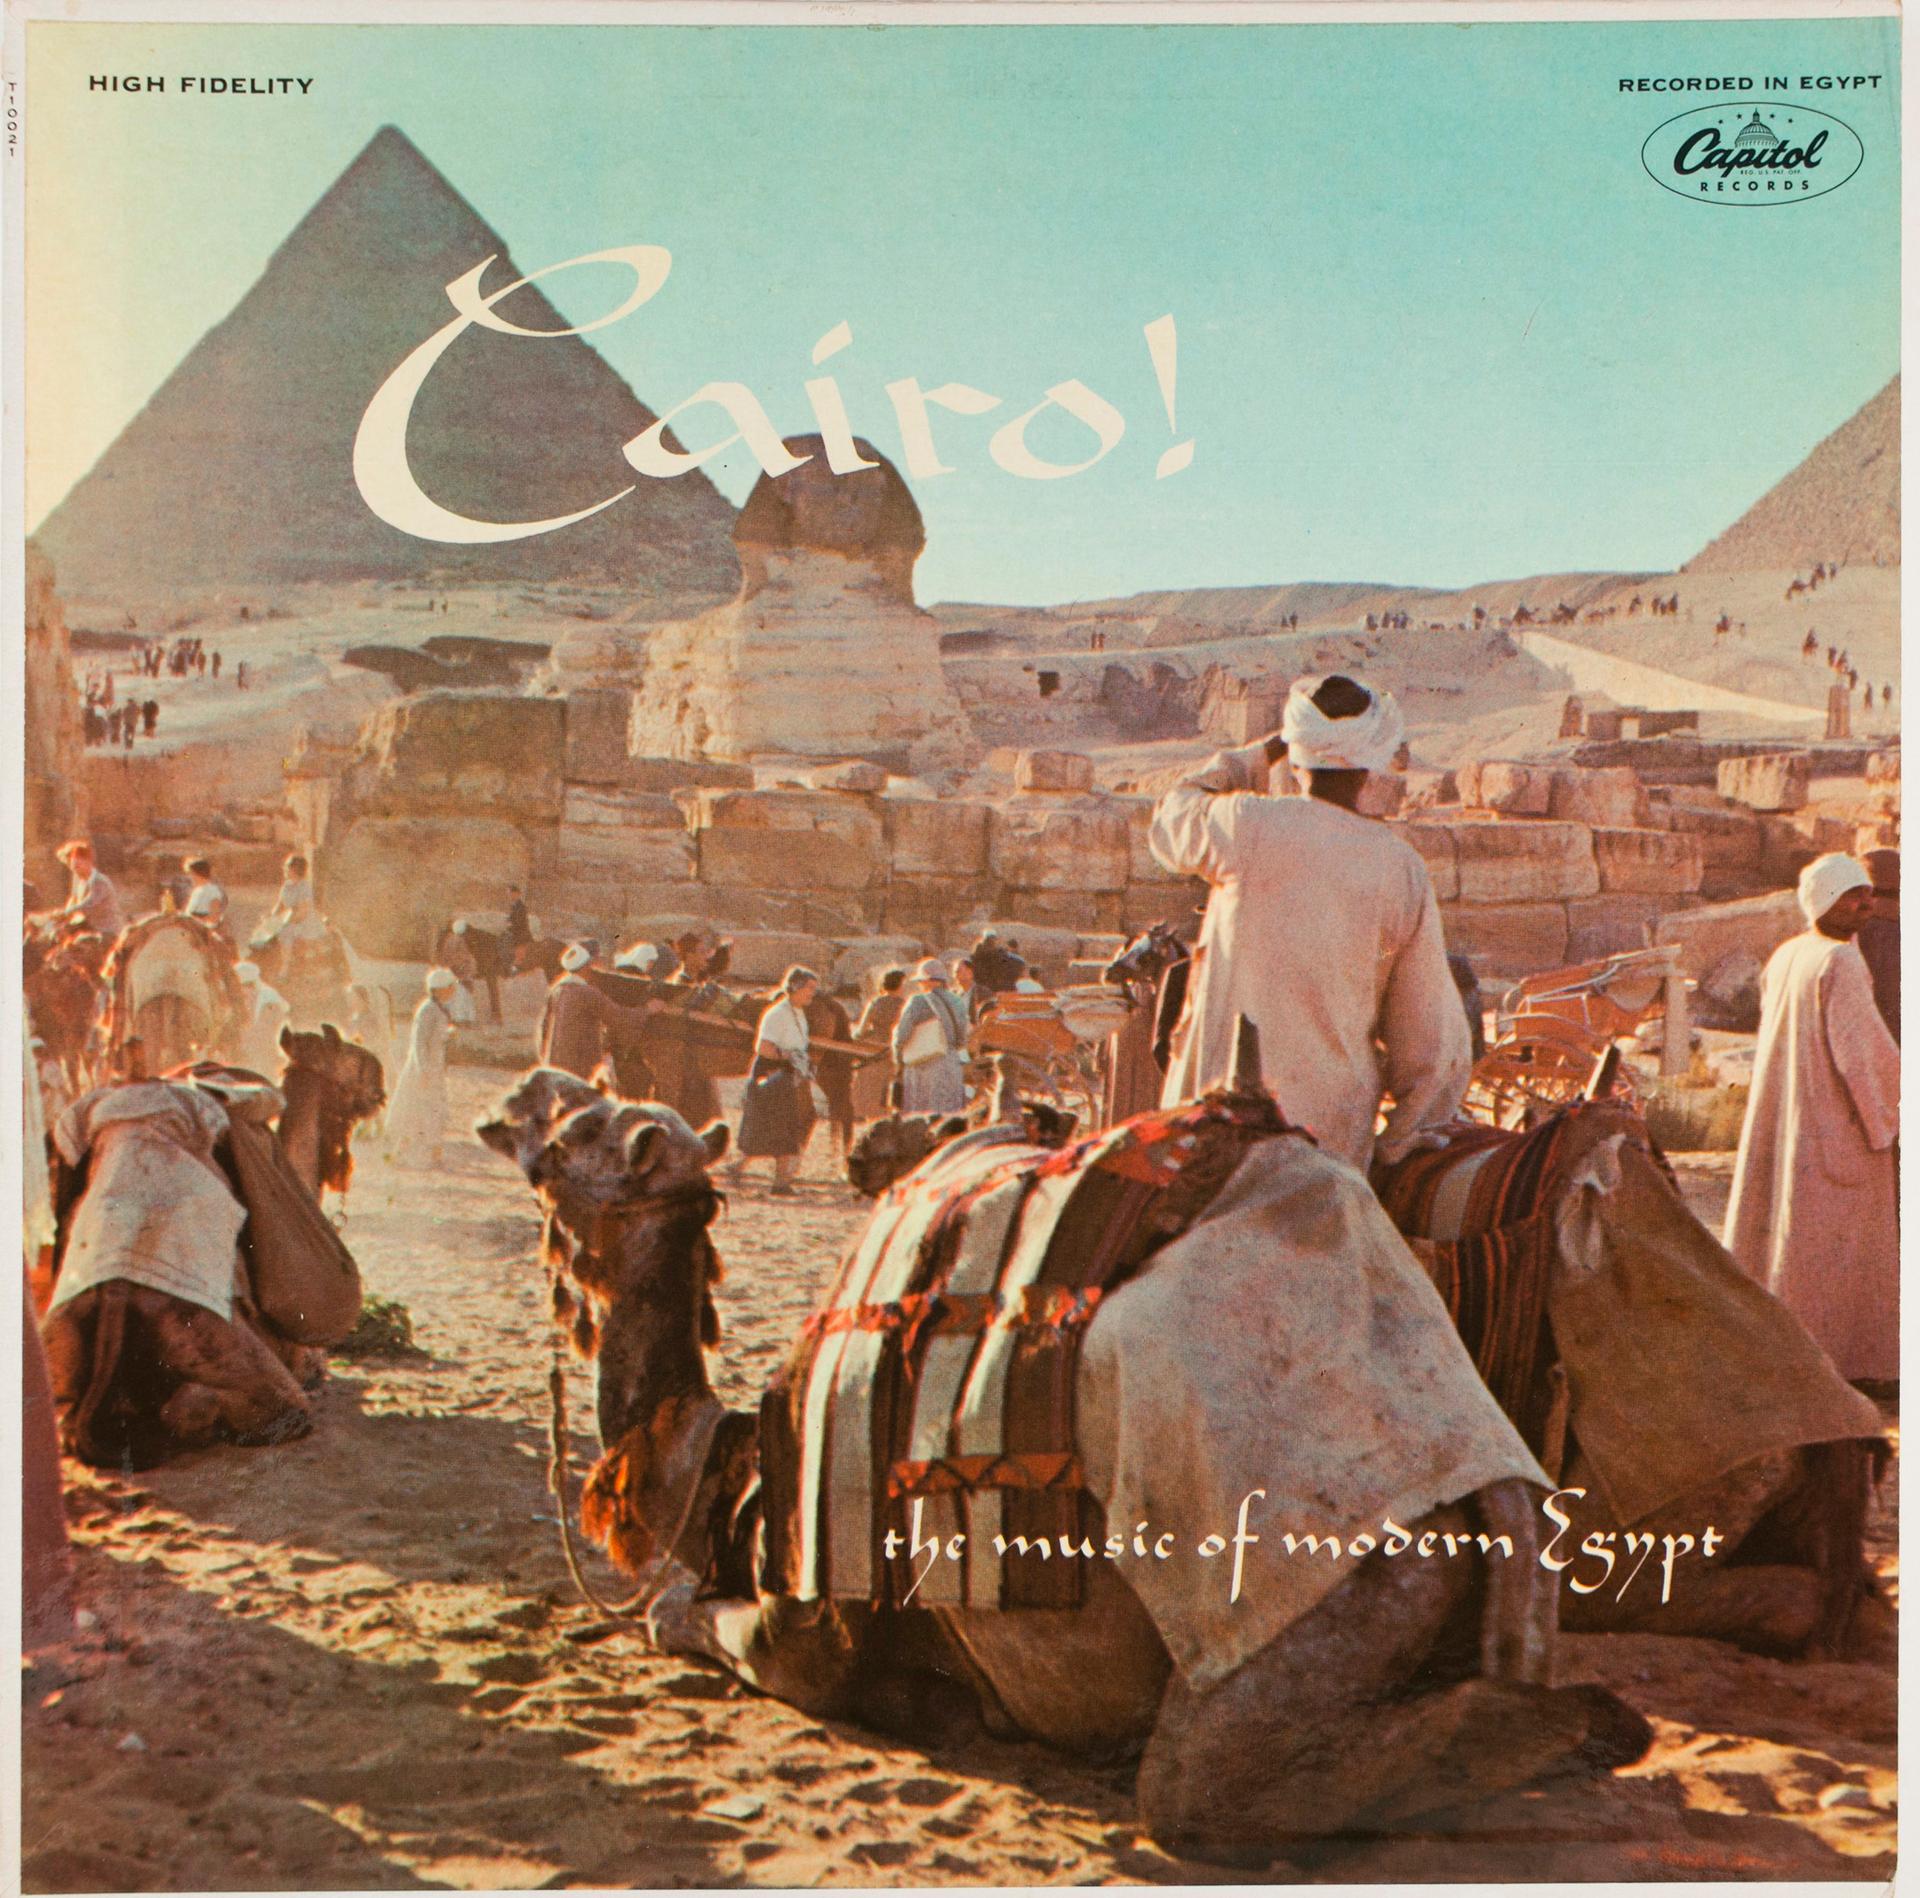 Cairo! The Music of Modern Egypt